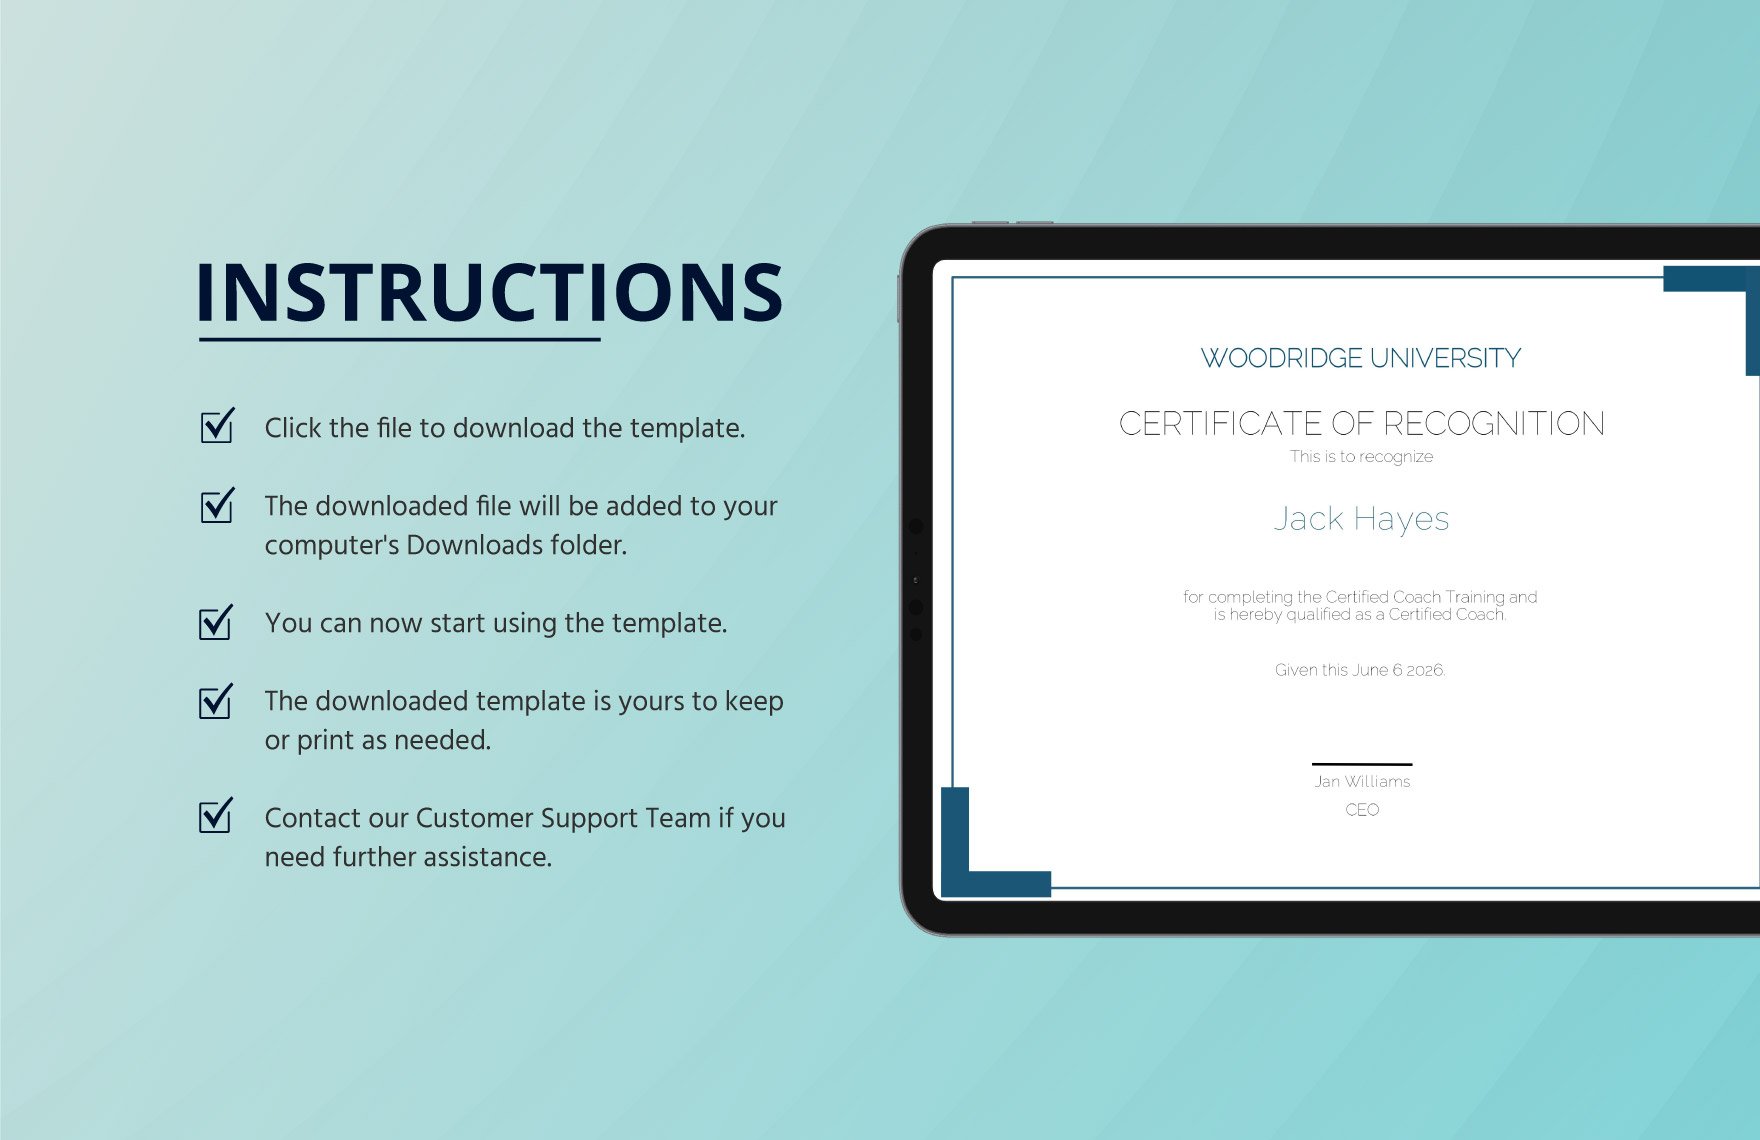 Computer Coaching Certificate Template